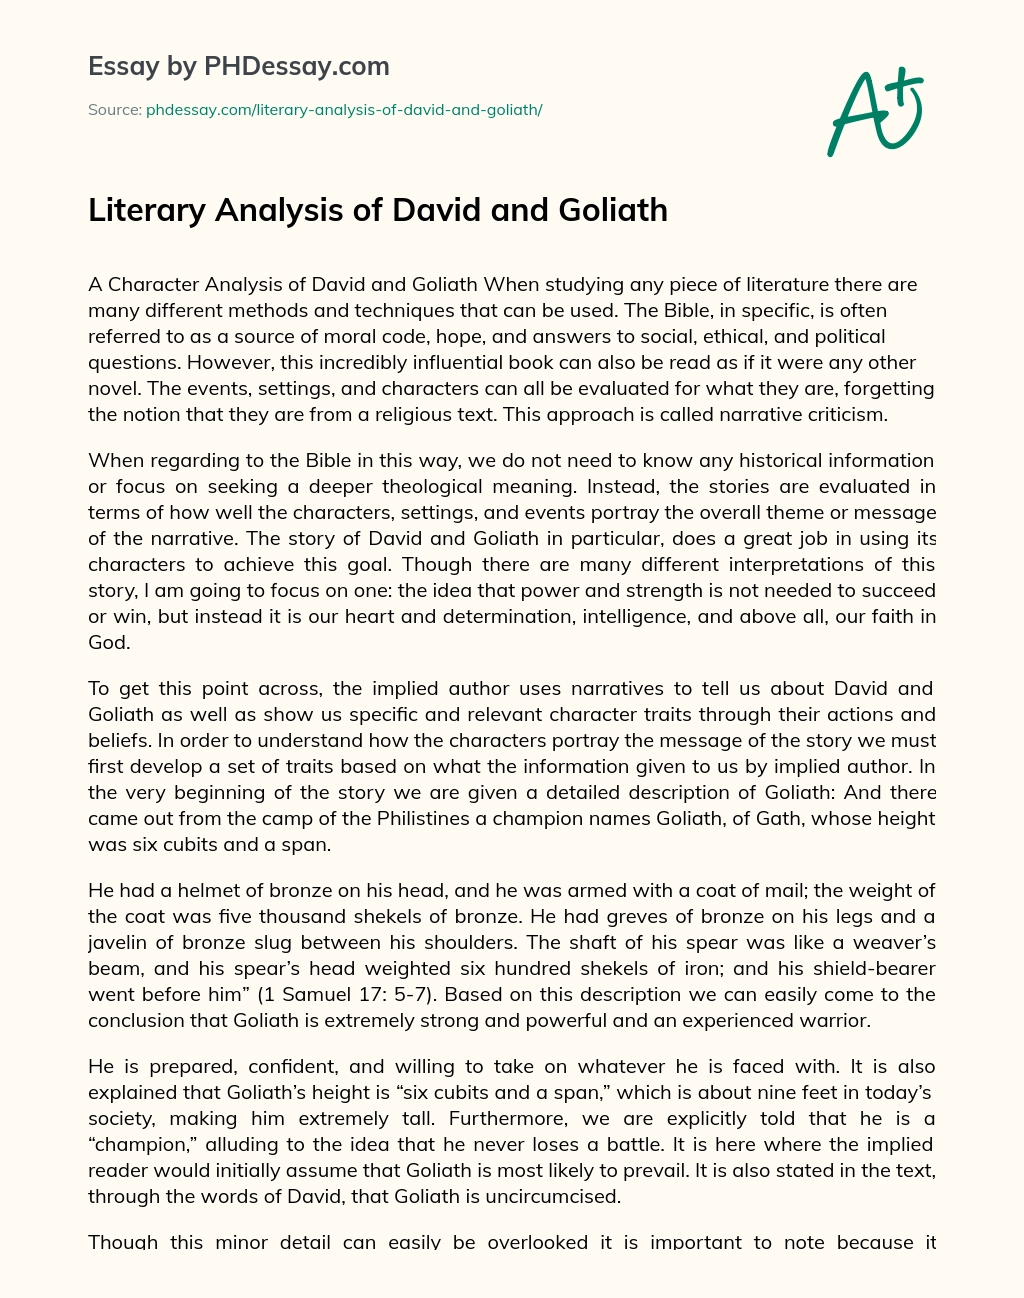 Literary Analysis of David and Goliath essay